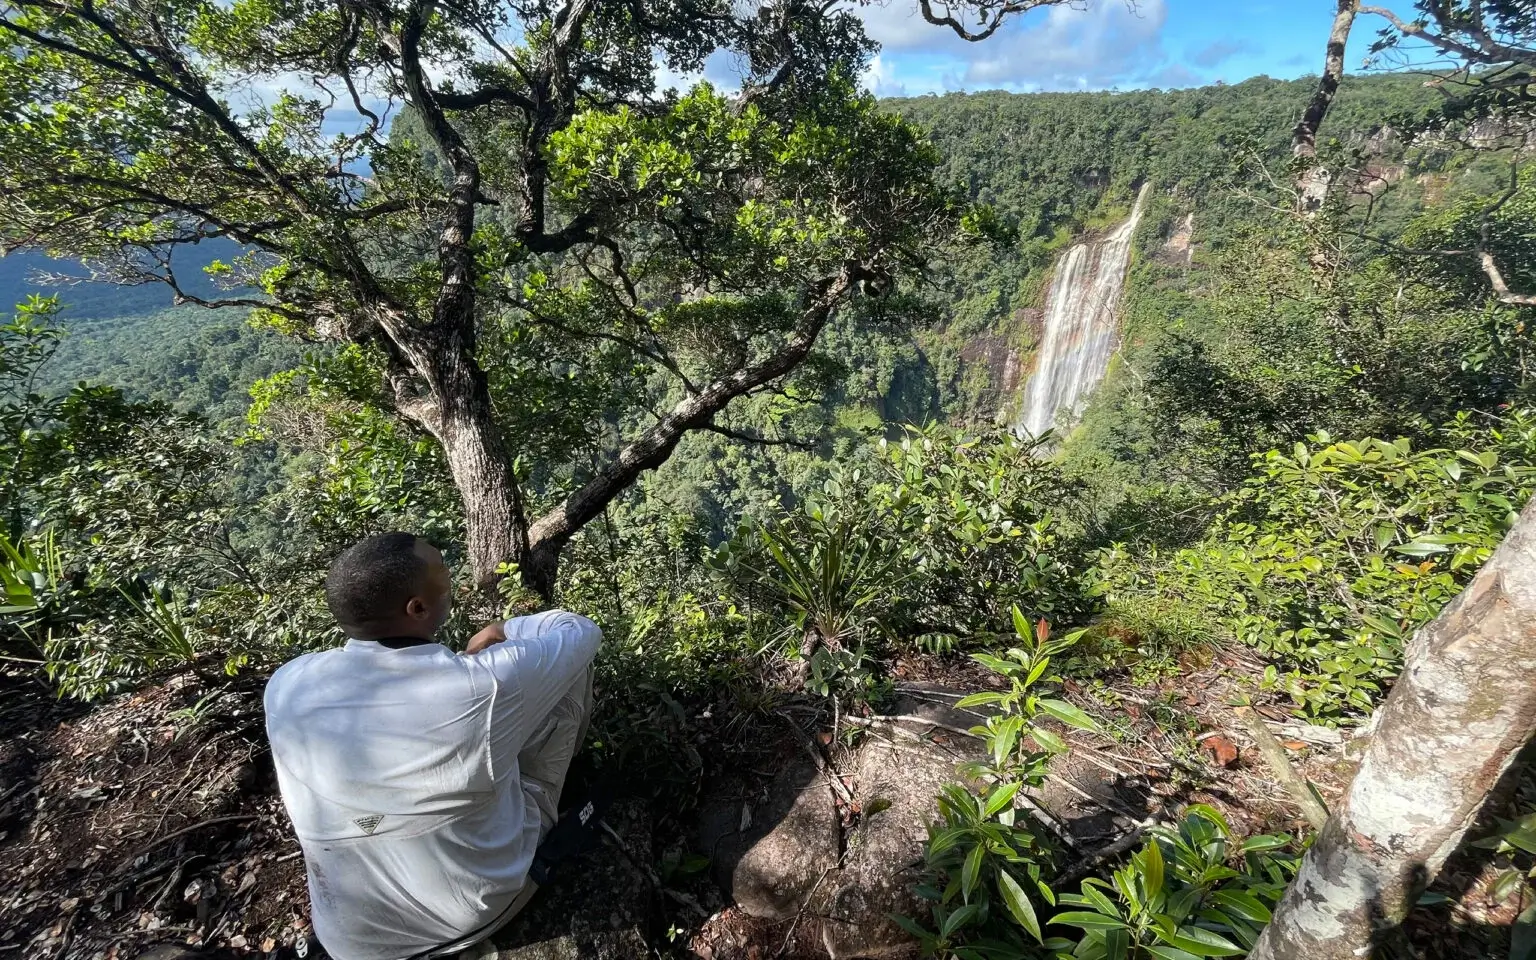 Suriname activist John Goedschalk is seeking 10.000 signatures to save 560,000 hectares of Suriname’s virgin rainforest.